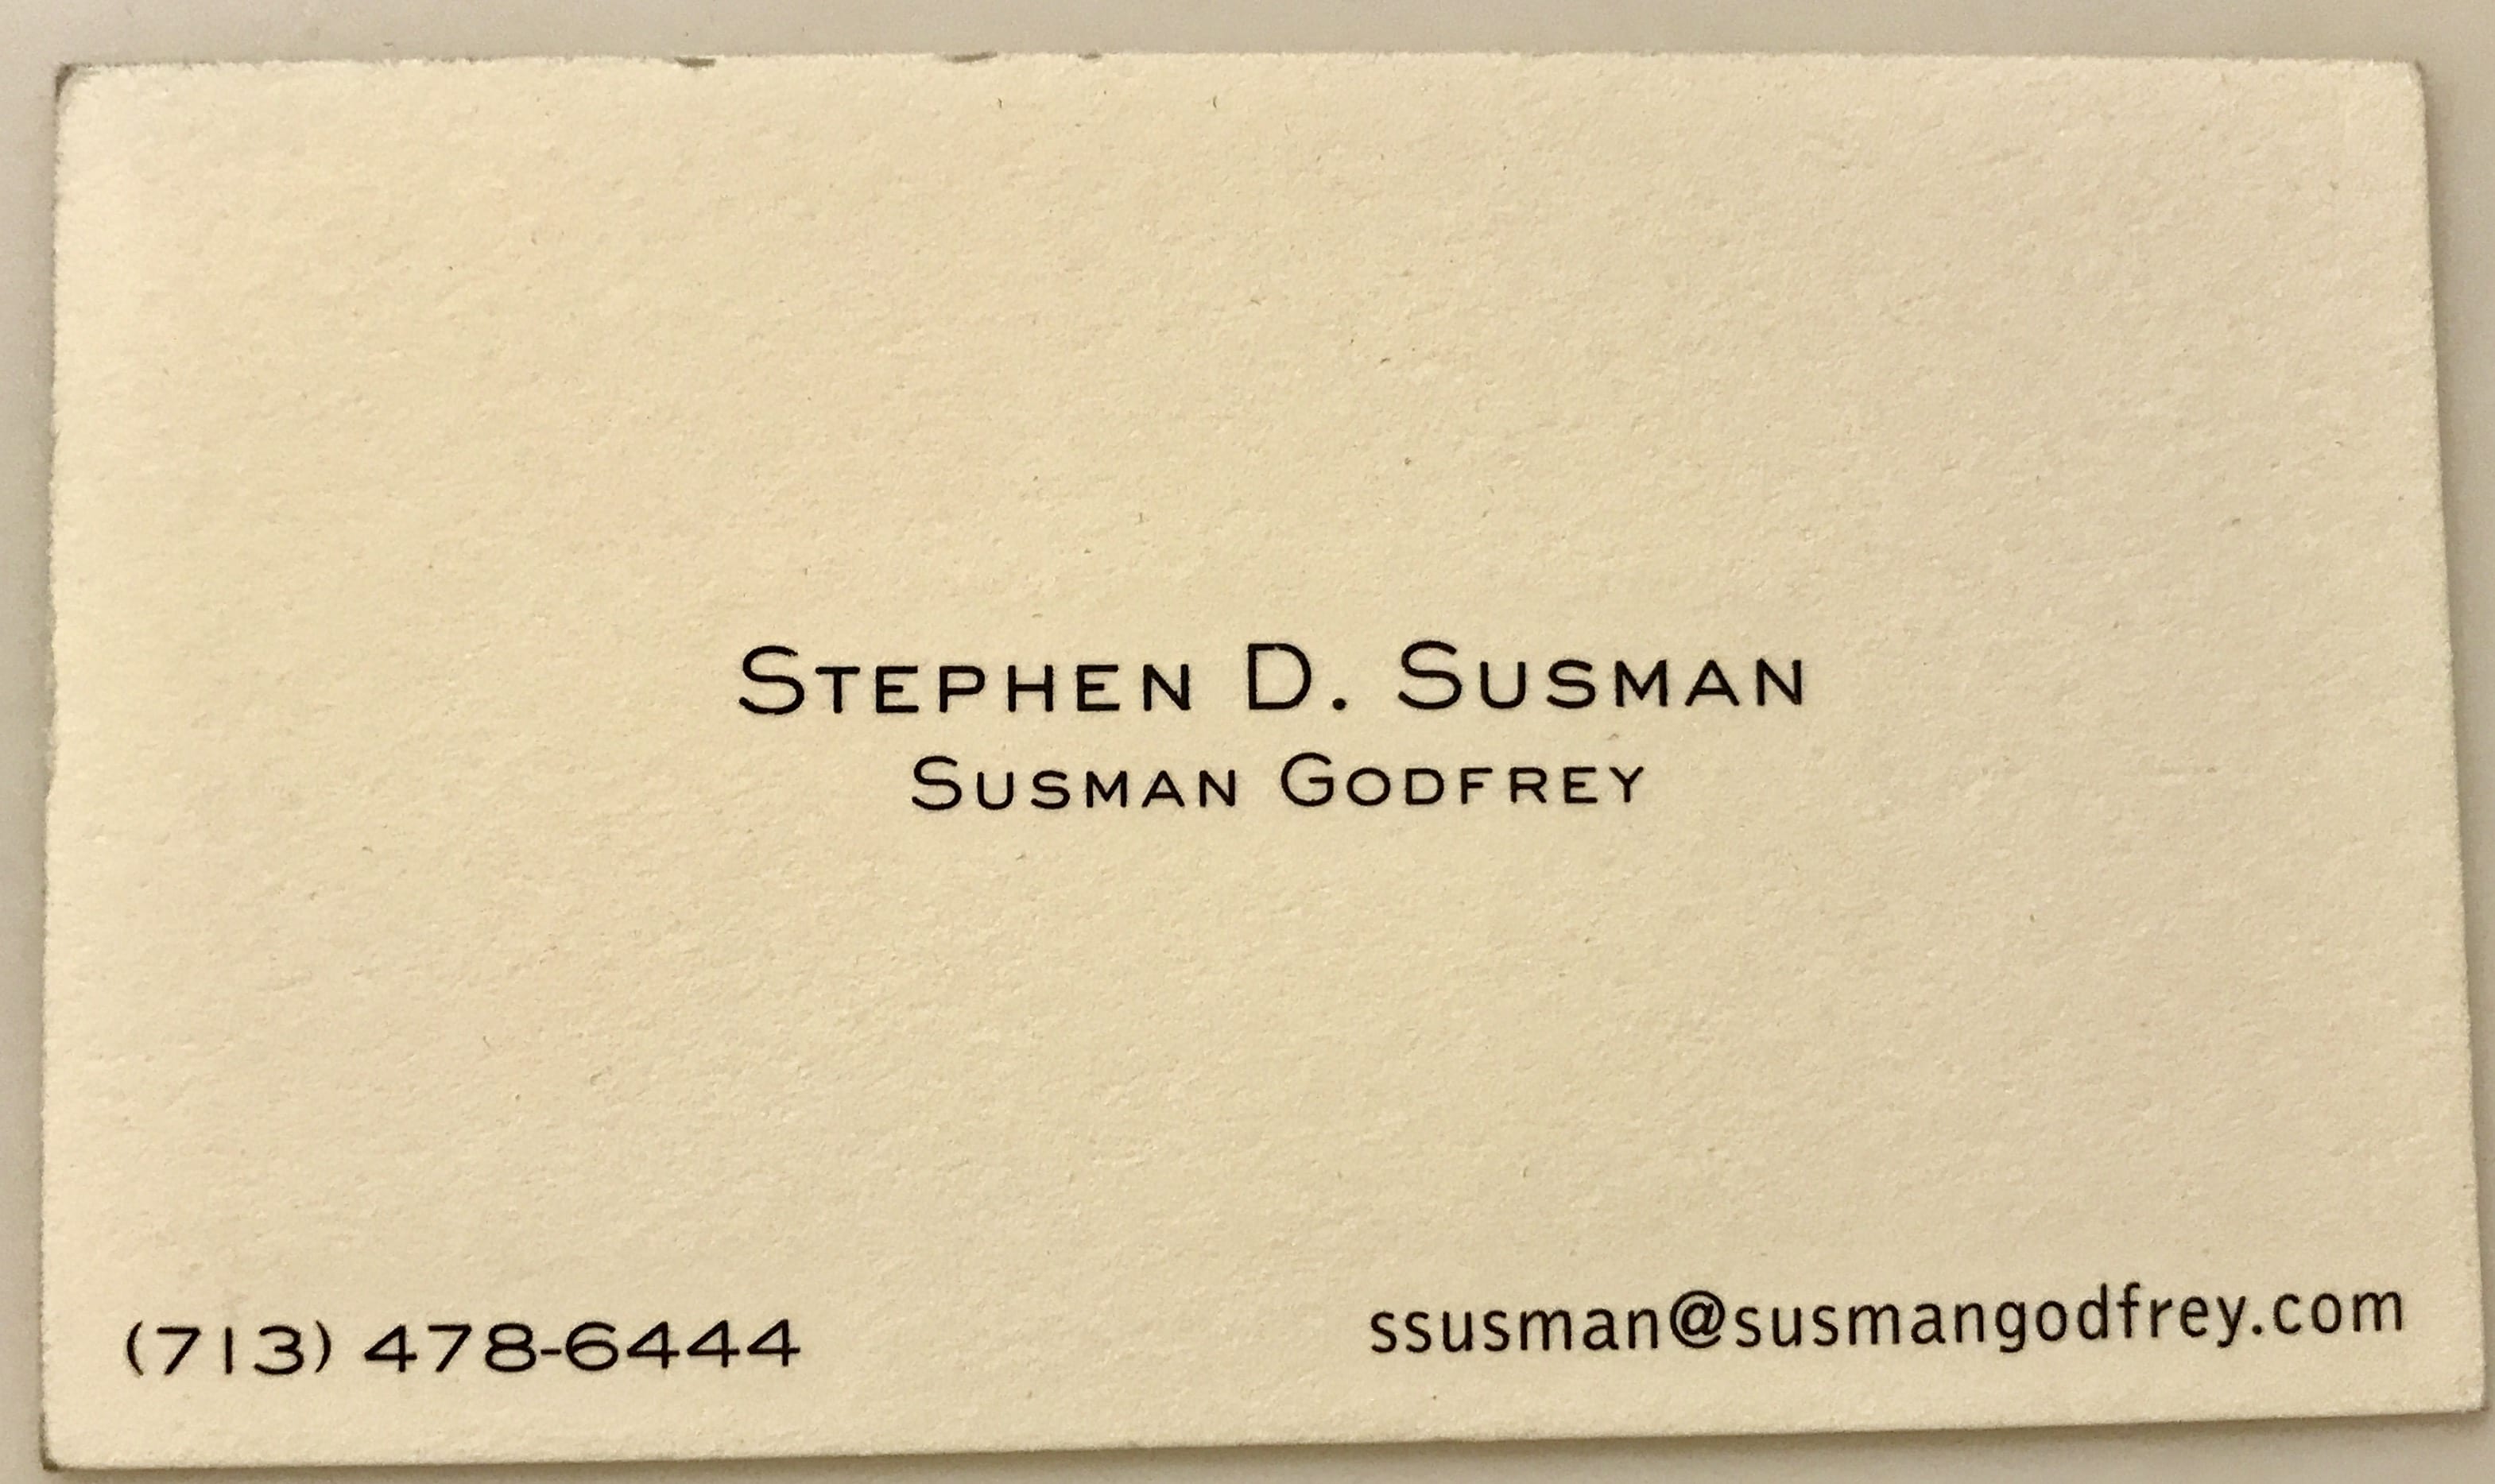 Steve Susman’s business card was sparse. But it was plenty.